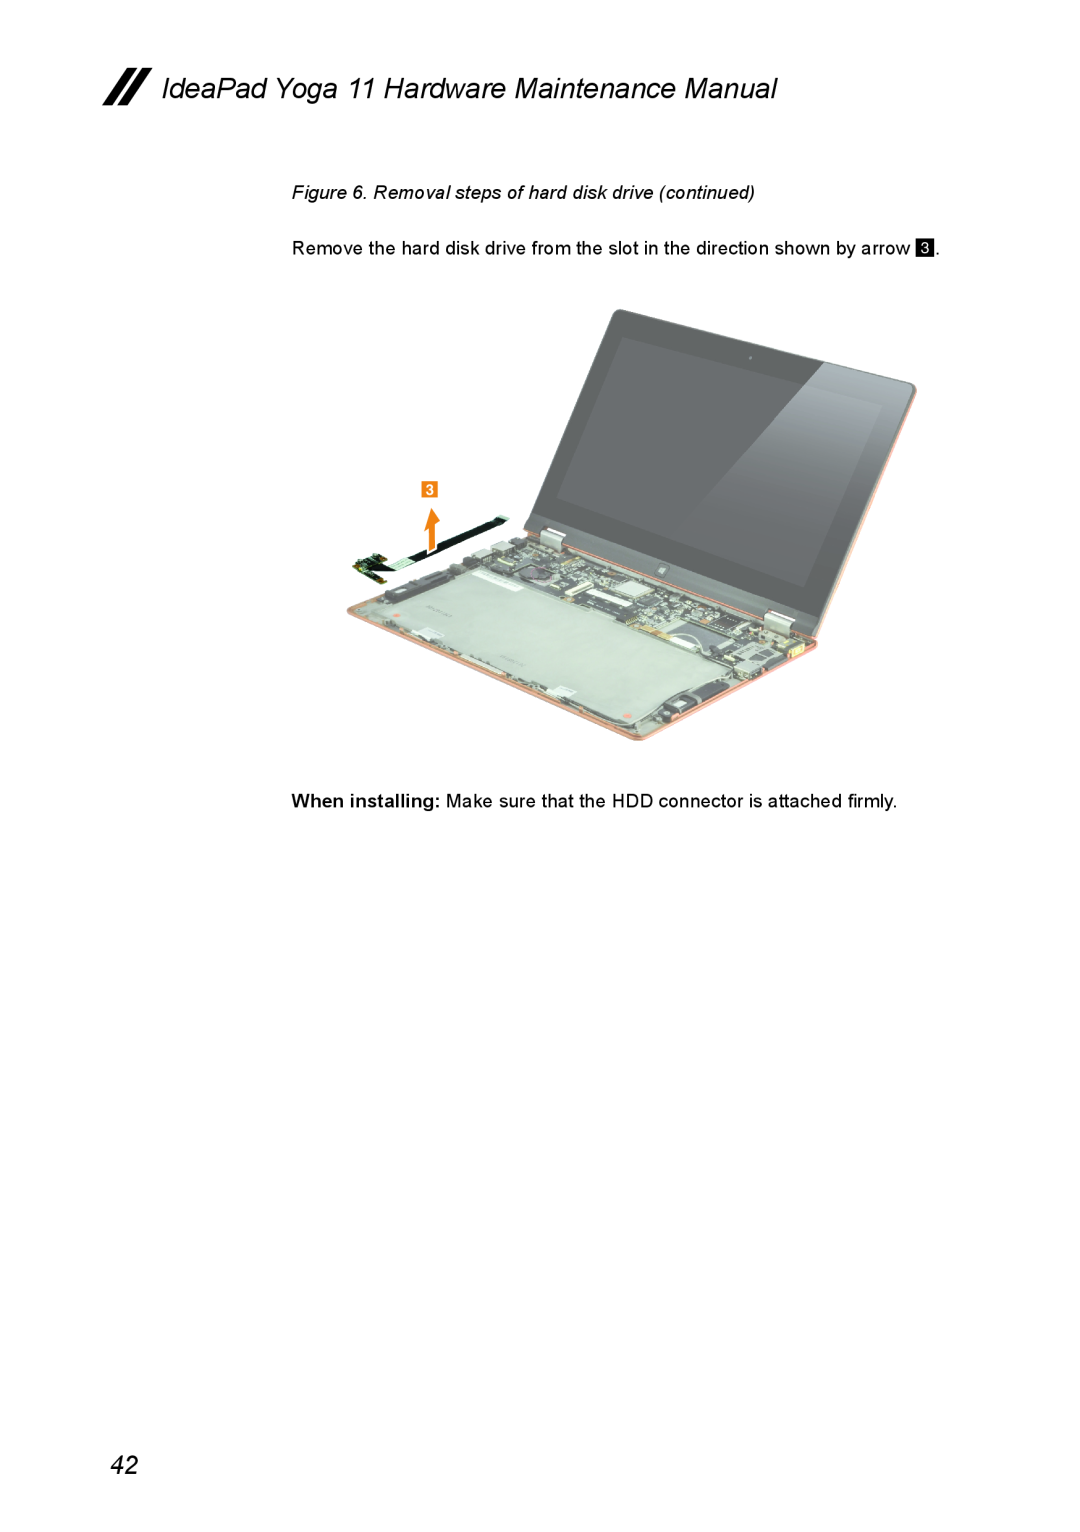 Lenovo manual Removal steps of hard disk drive continued, IdeaPad Yoga 11 Hardware Maintenance Manual 